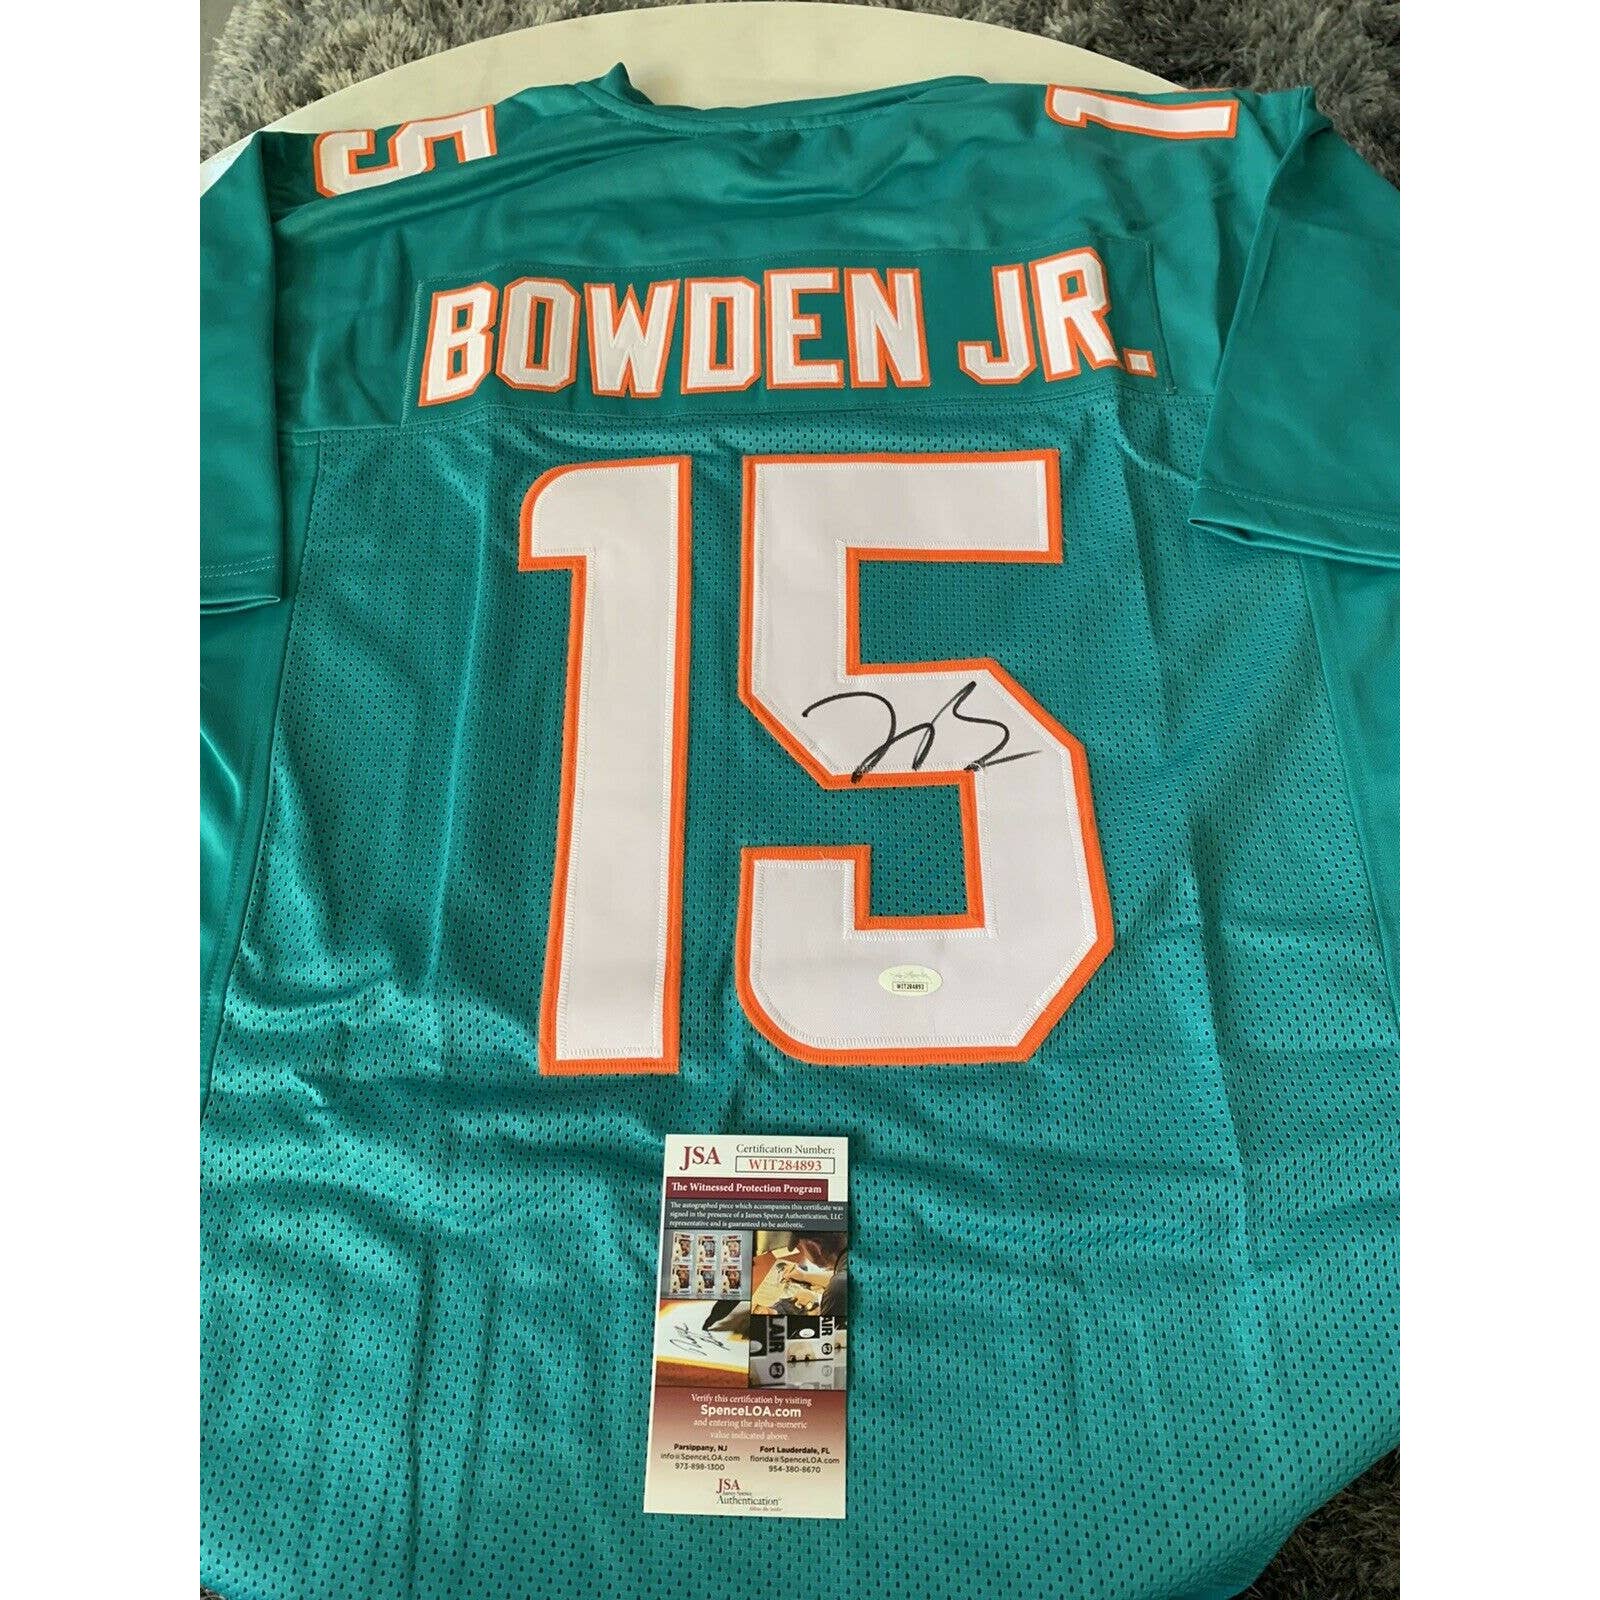 Lynn Bowden Jr Autographed/Signed Jersey JSA COA Miami Dolphins - TreasuresEvolved